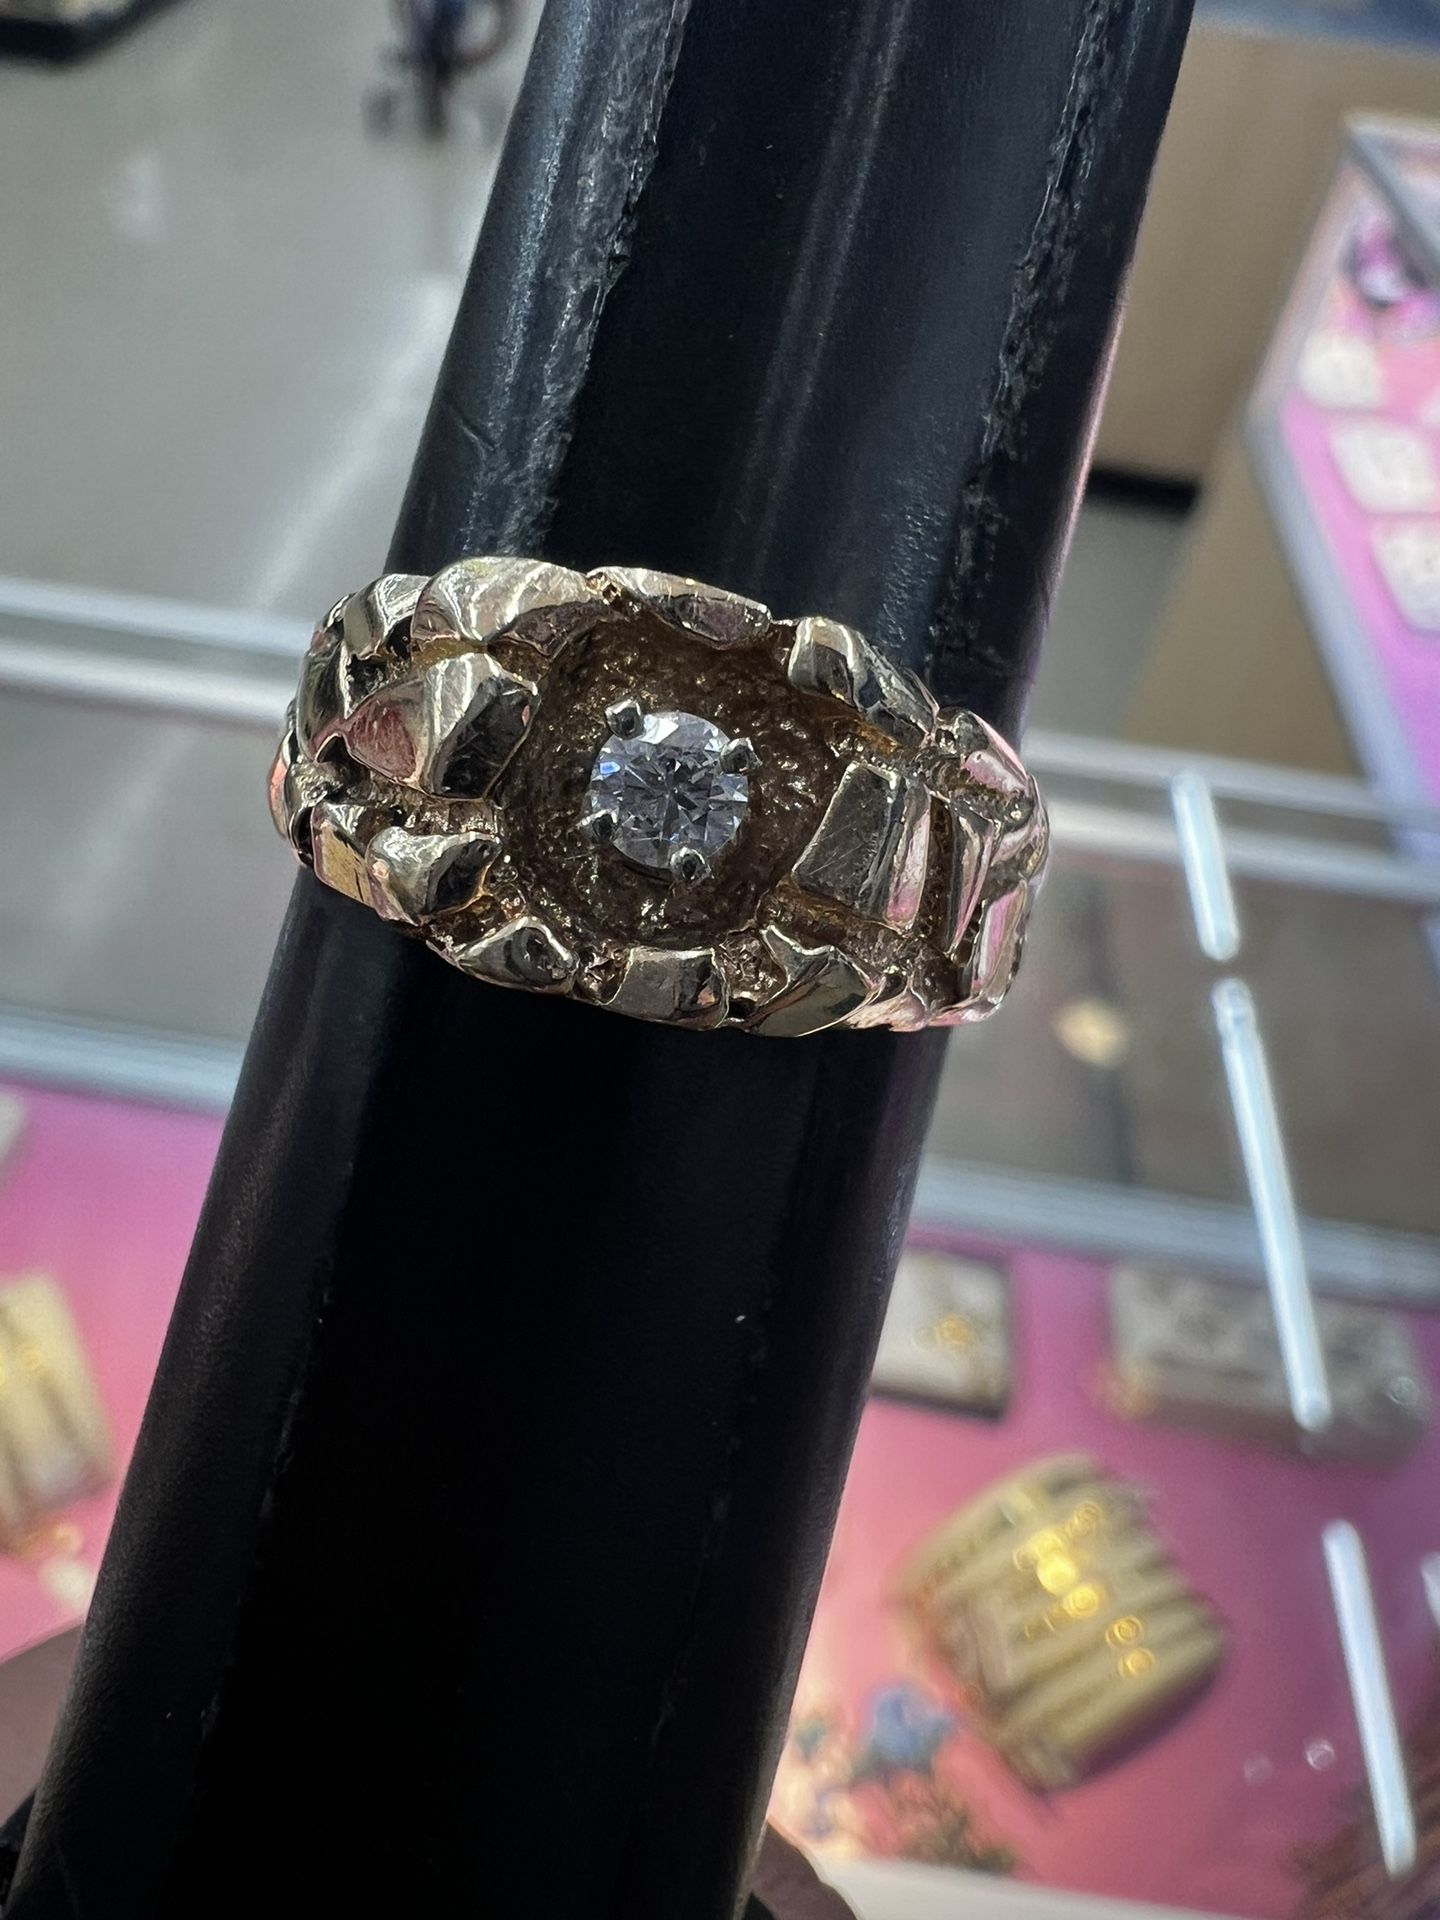 Diamond Nugget Ring 